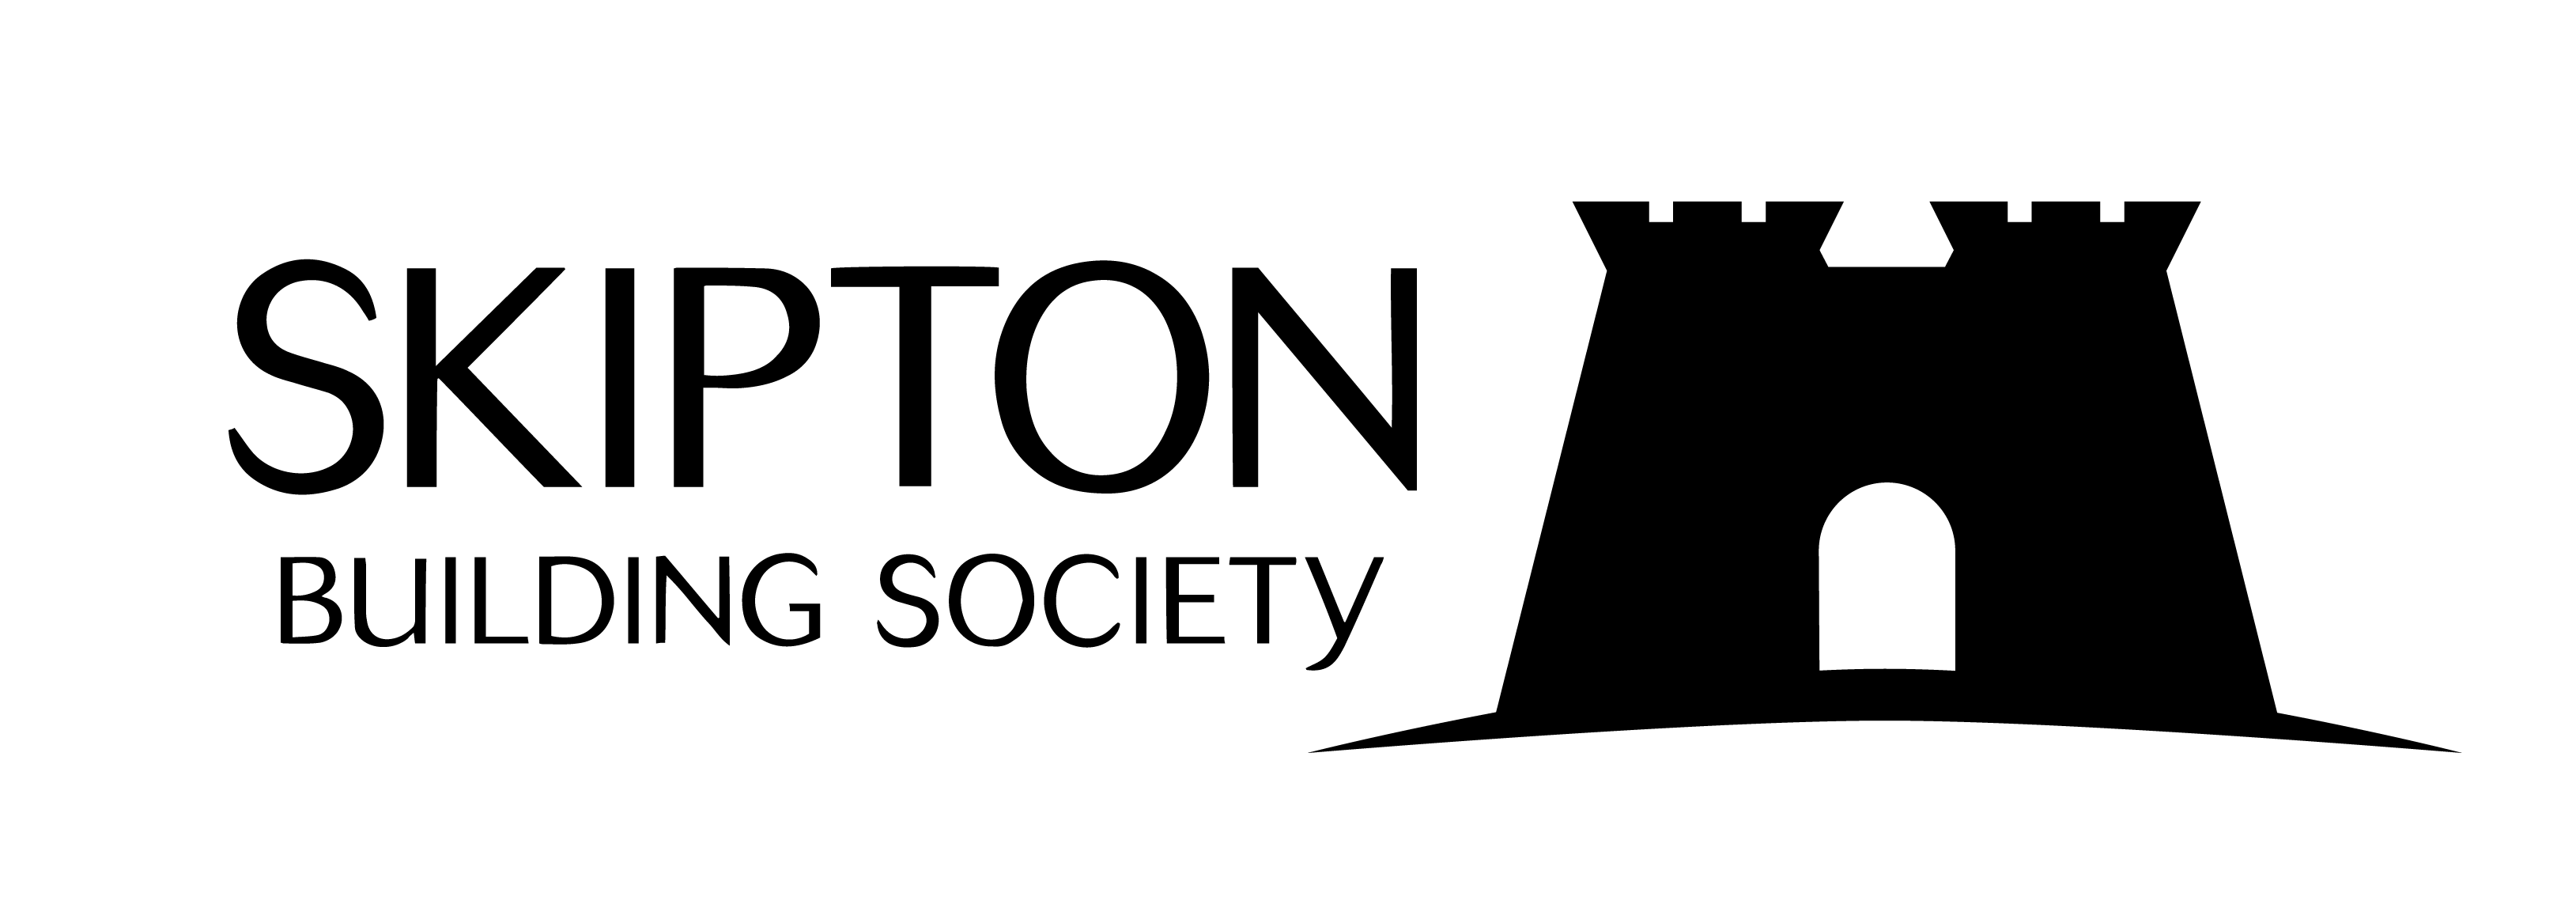 Skipton Building Society Logo Black-01